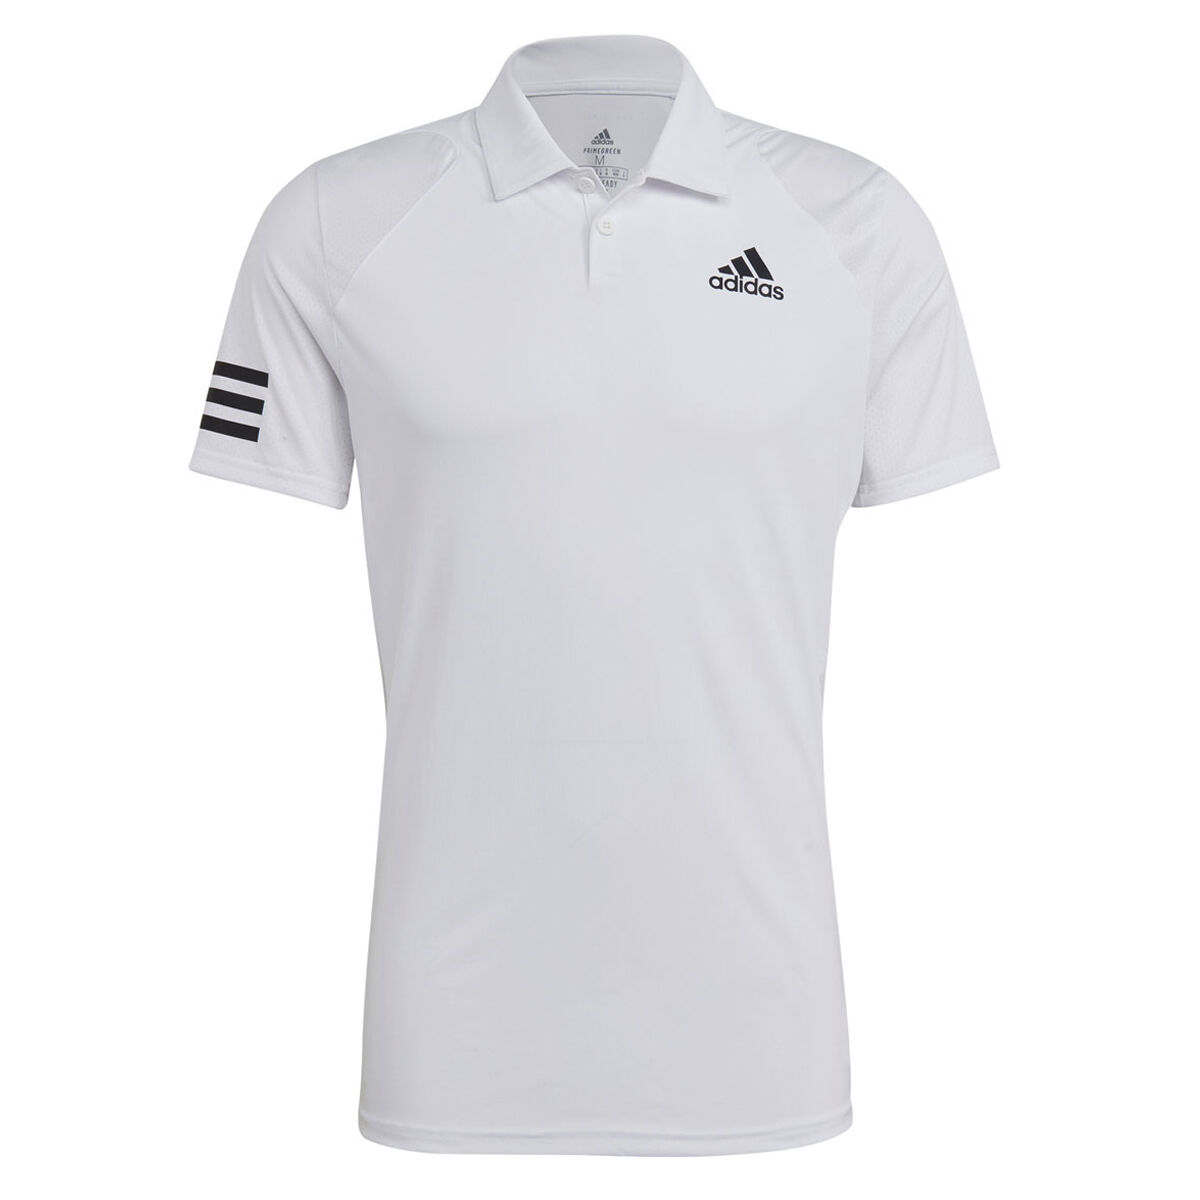 adidas NYCFC Stripe Polo Shirt - White/Light Blue